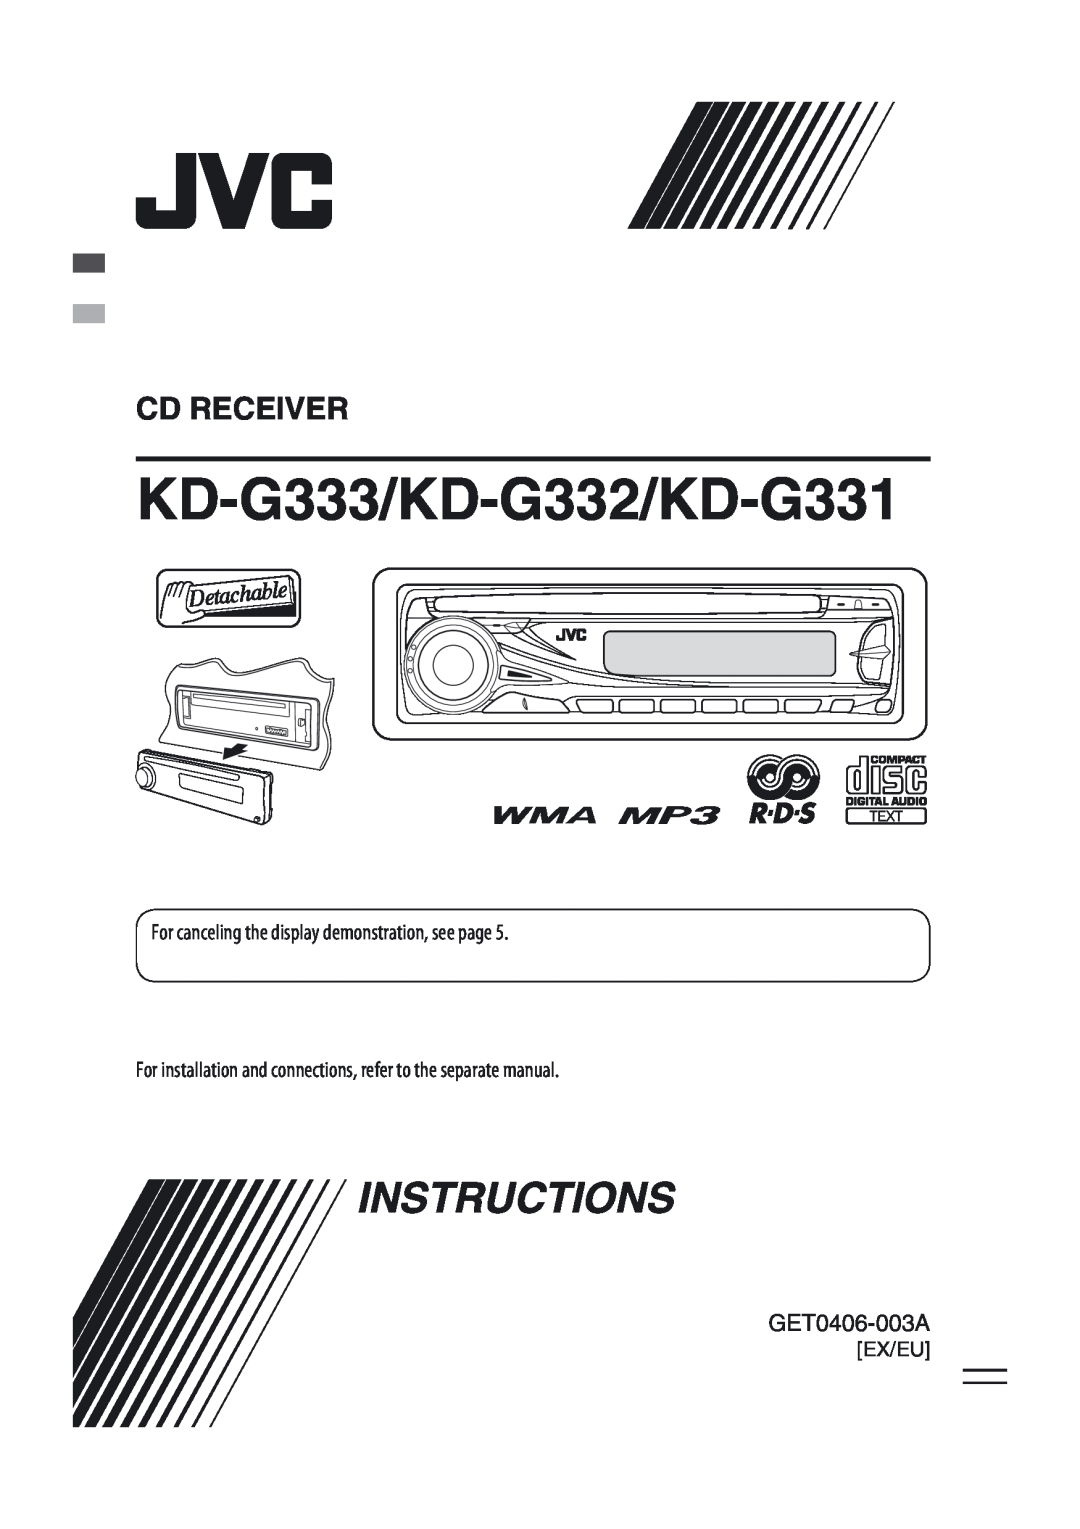 JVC manual GET0406-003A, KD-G333/KD-G332/KD-G331, Instructions, Cd Receiver, Ex/Eu 